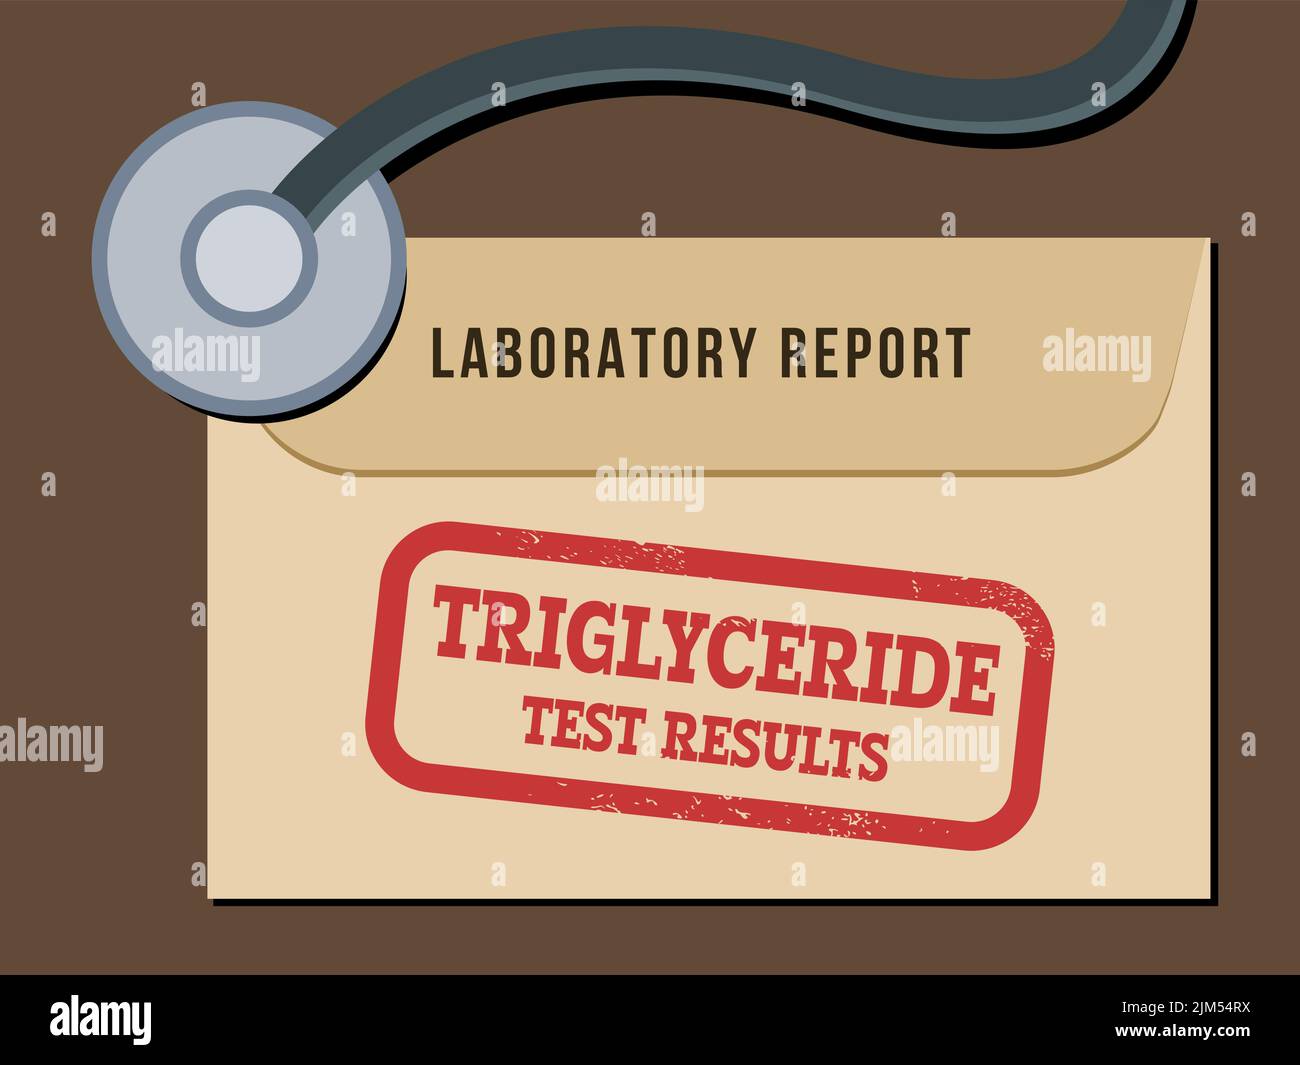 Triglyceride bloodwork laboratory test results. Health concept. Medical laboratory report envelope. Vector illustration. Stock Vector